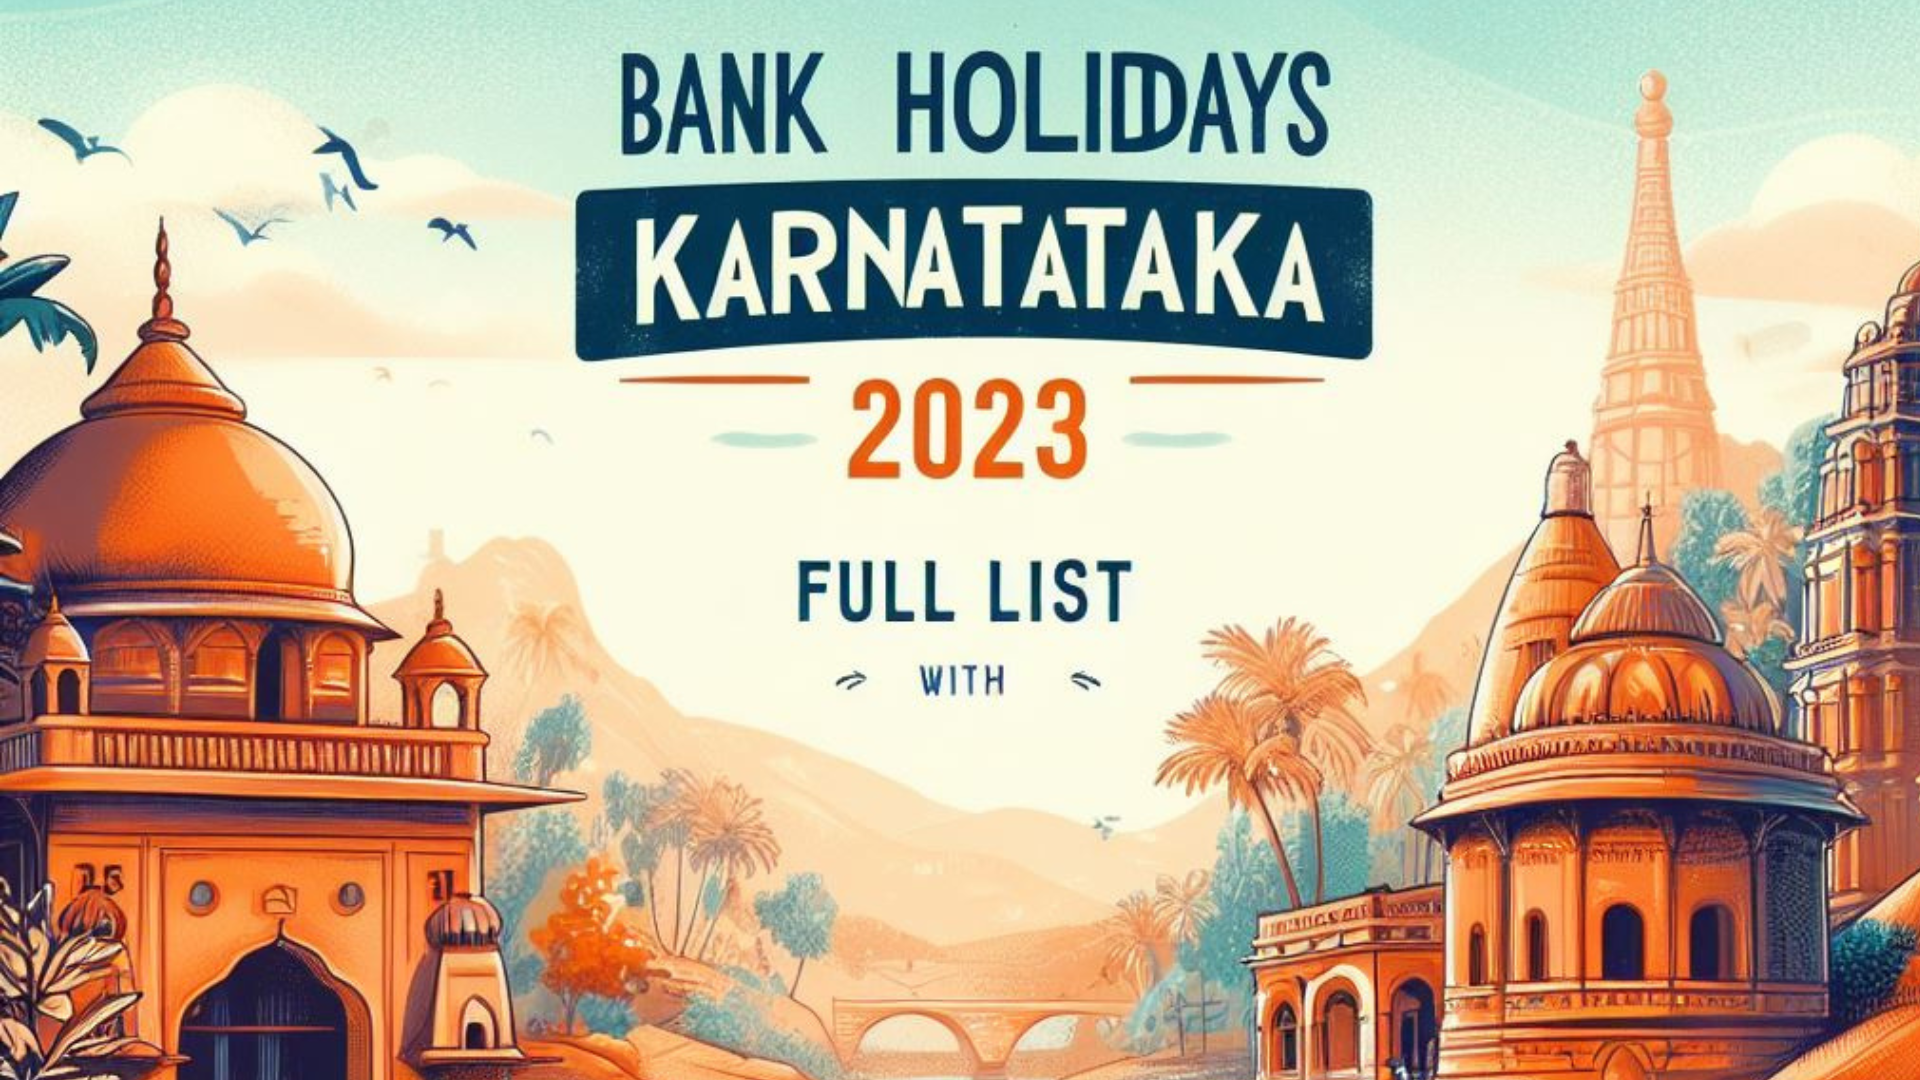 Bank Holidays in Karnataka 2023